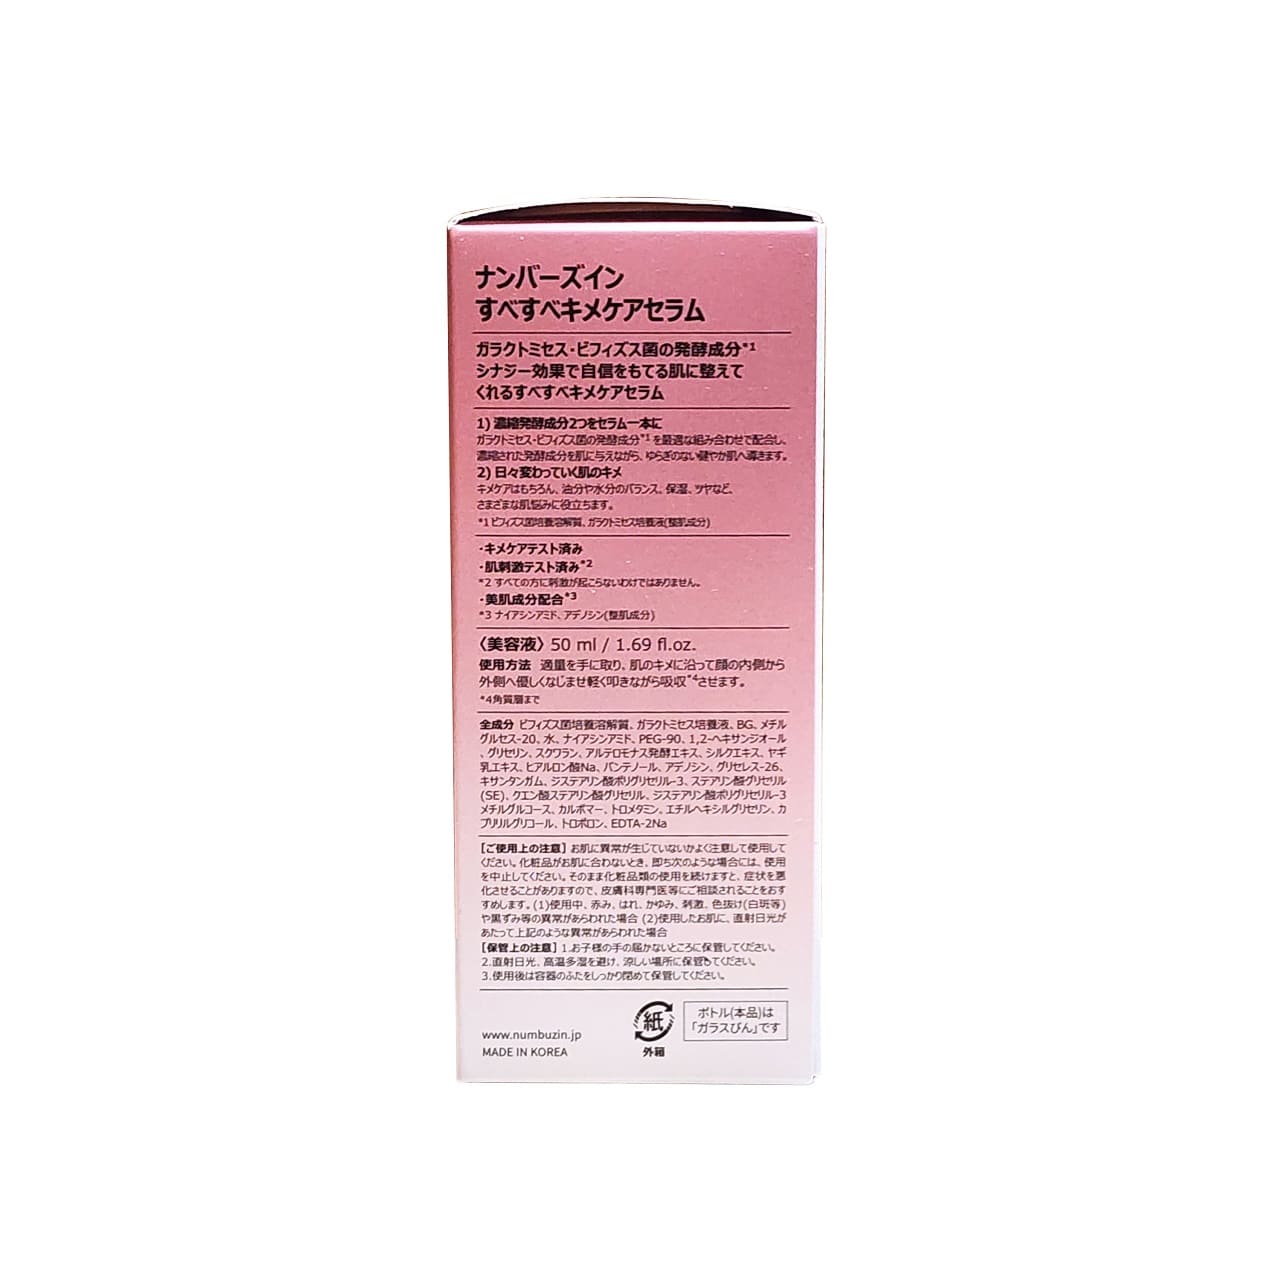 Description, Directions, Ingredients, Warnings for numbuzin No. 3 Skin Softening Serum (50 mL) in Japanese